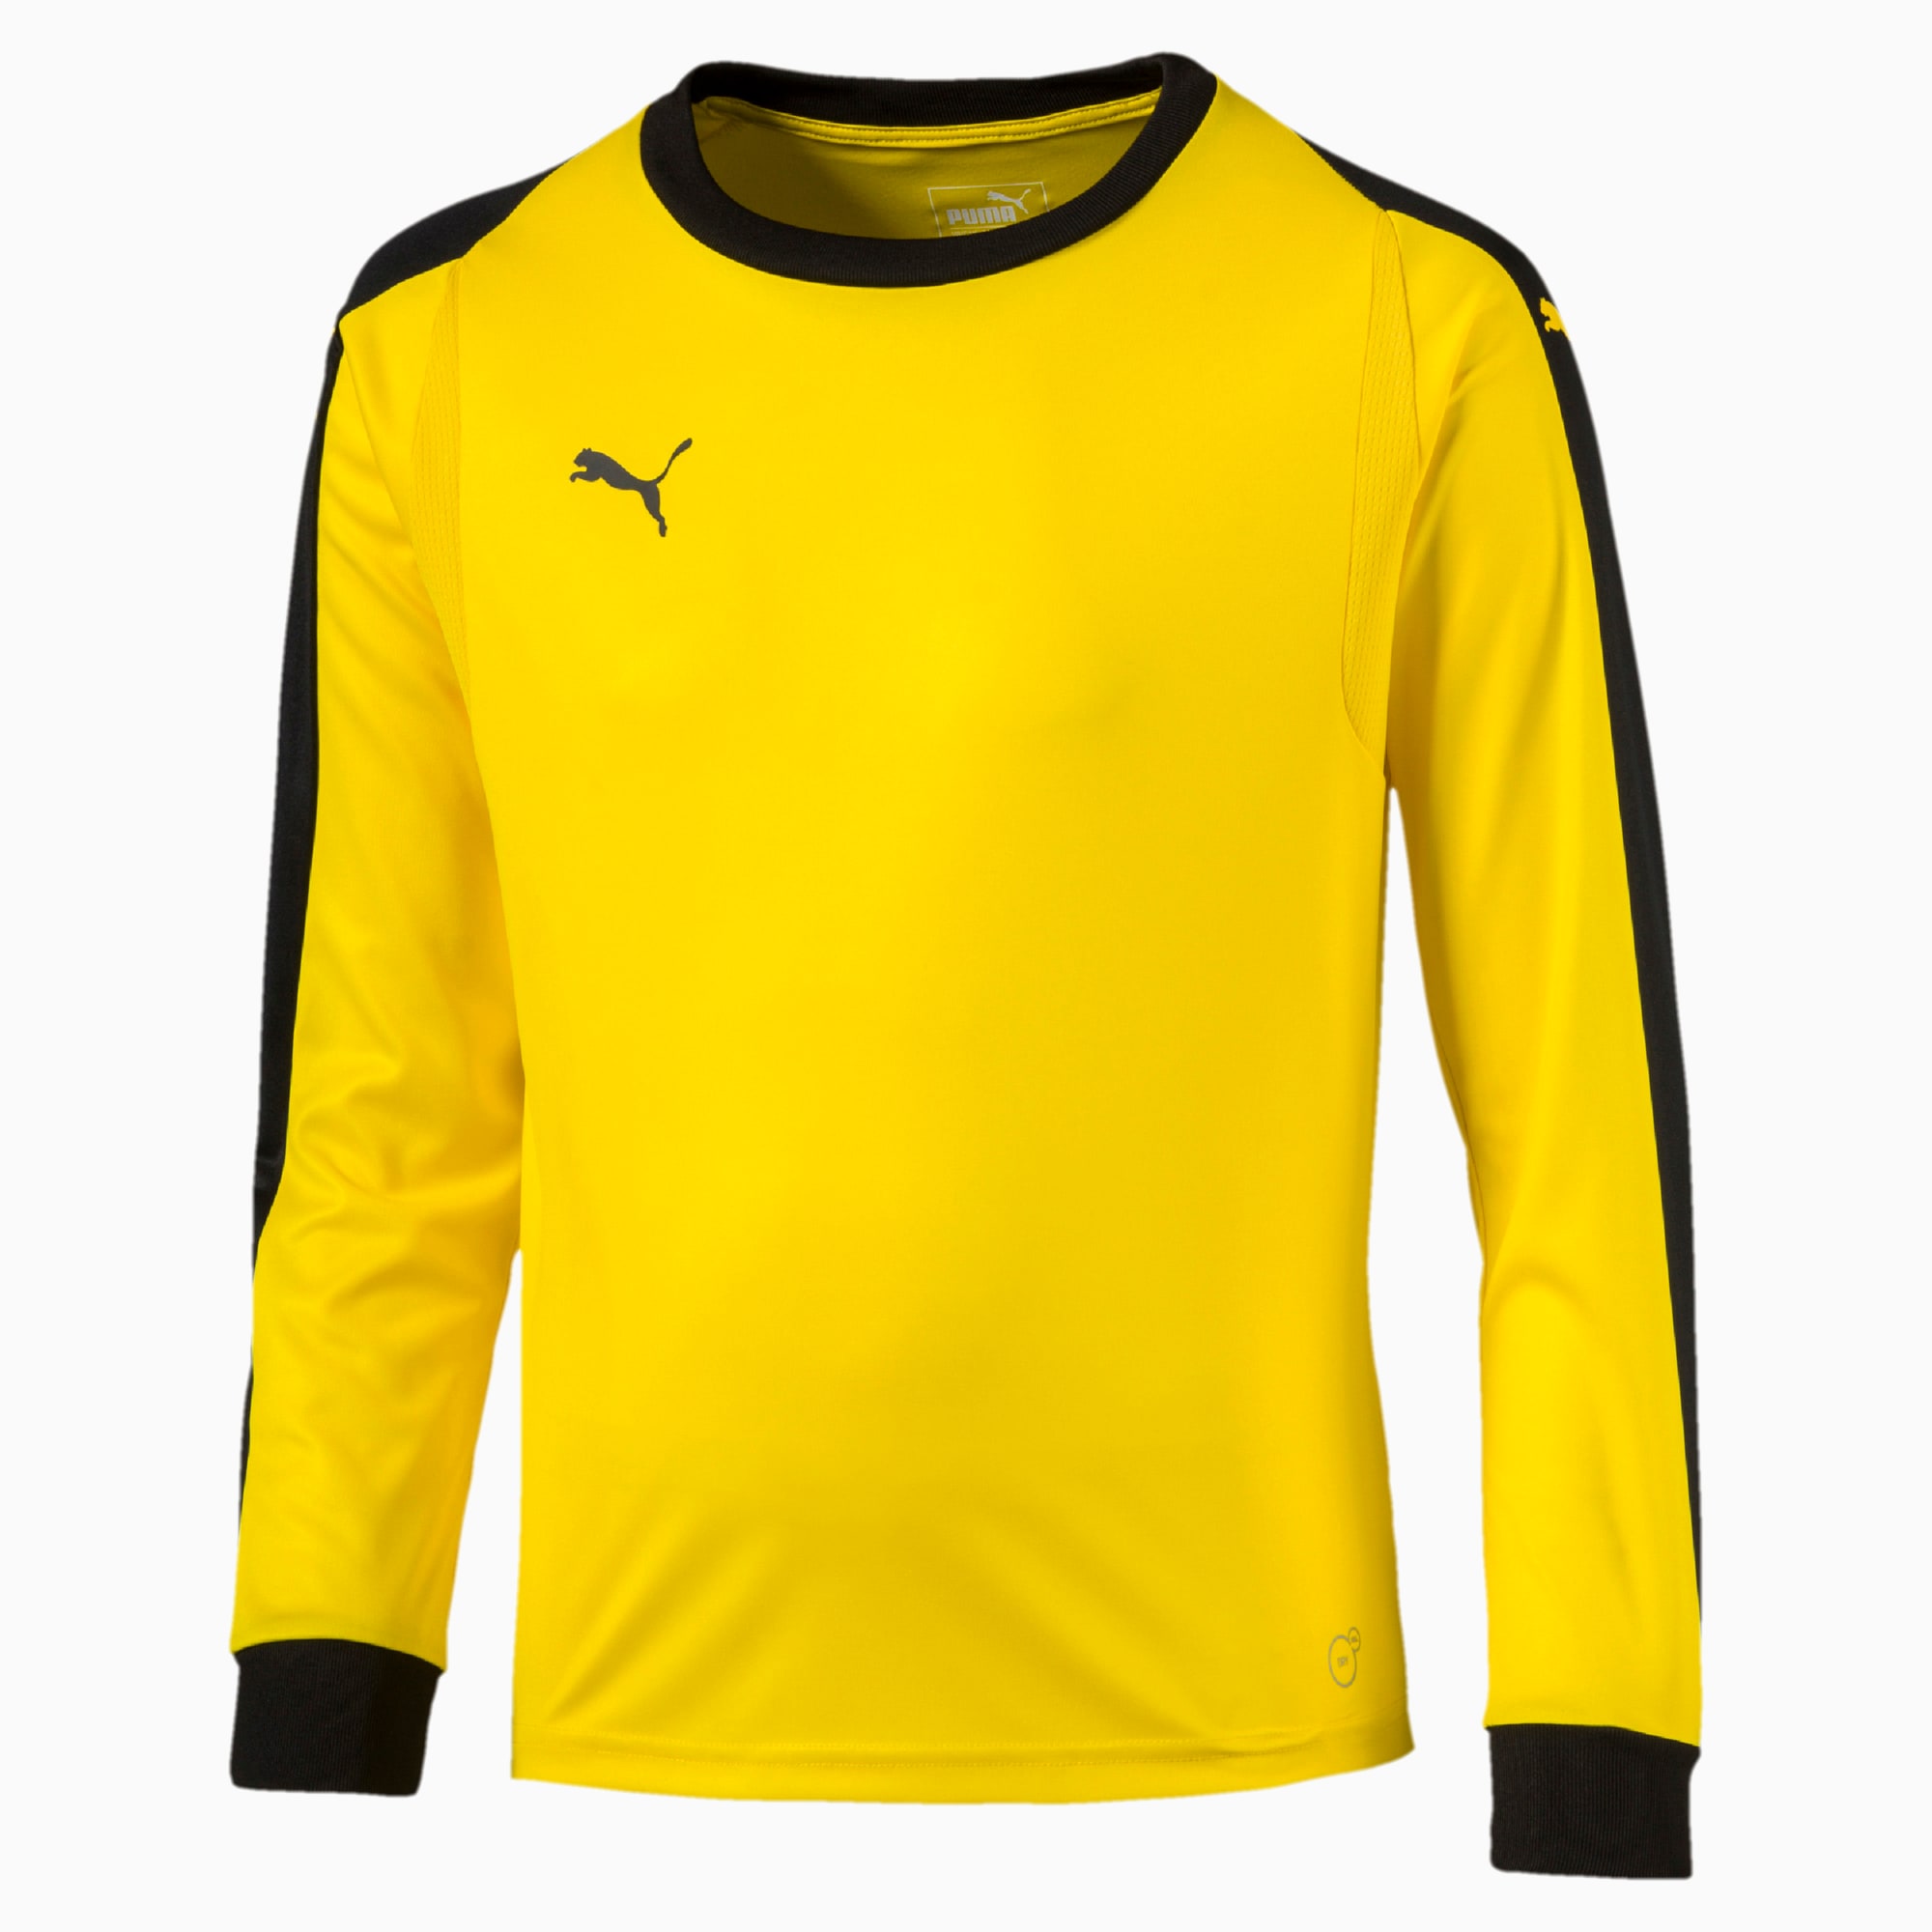 black and yellow puma shirt